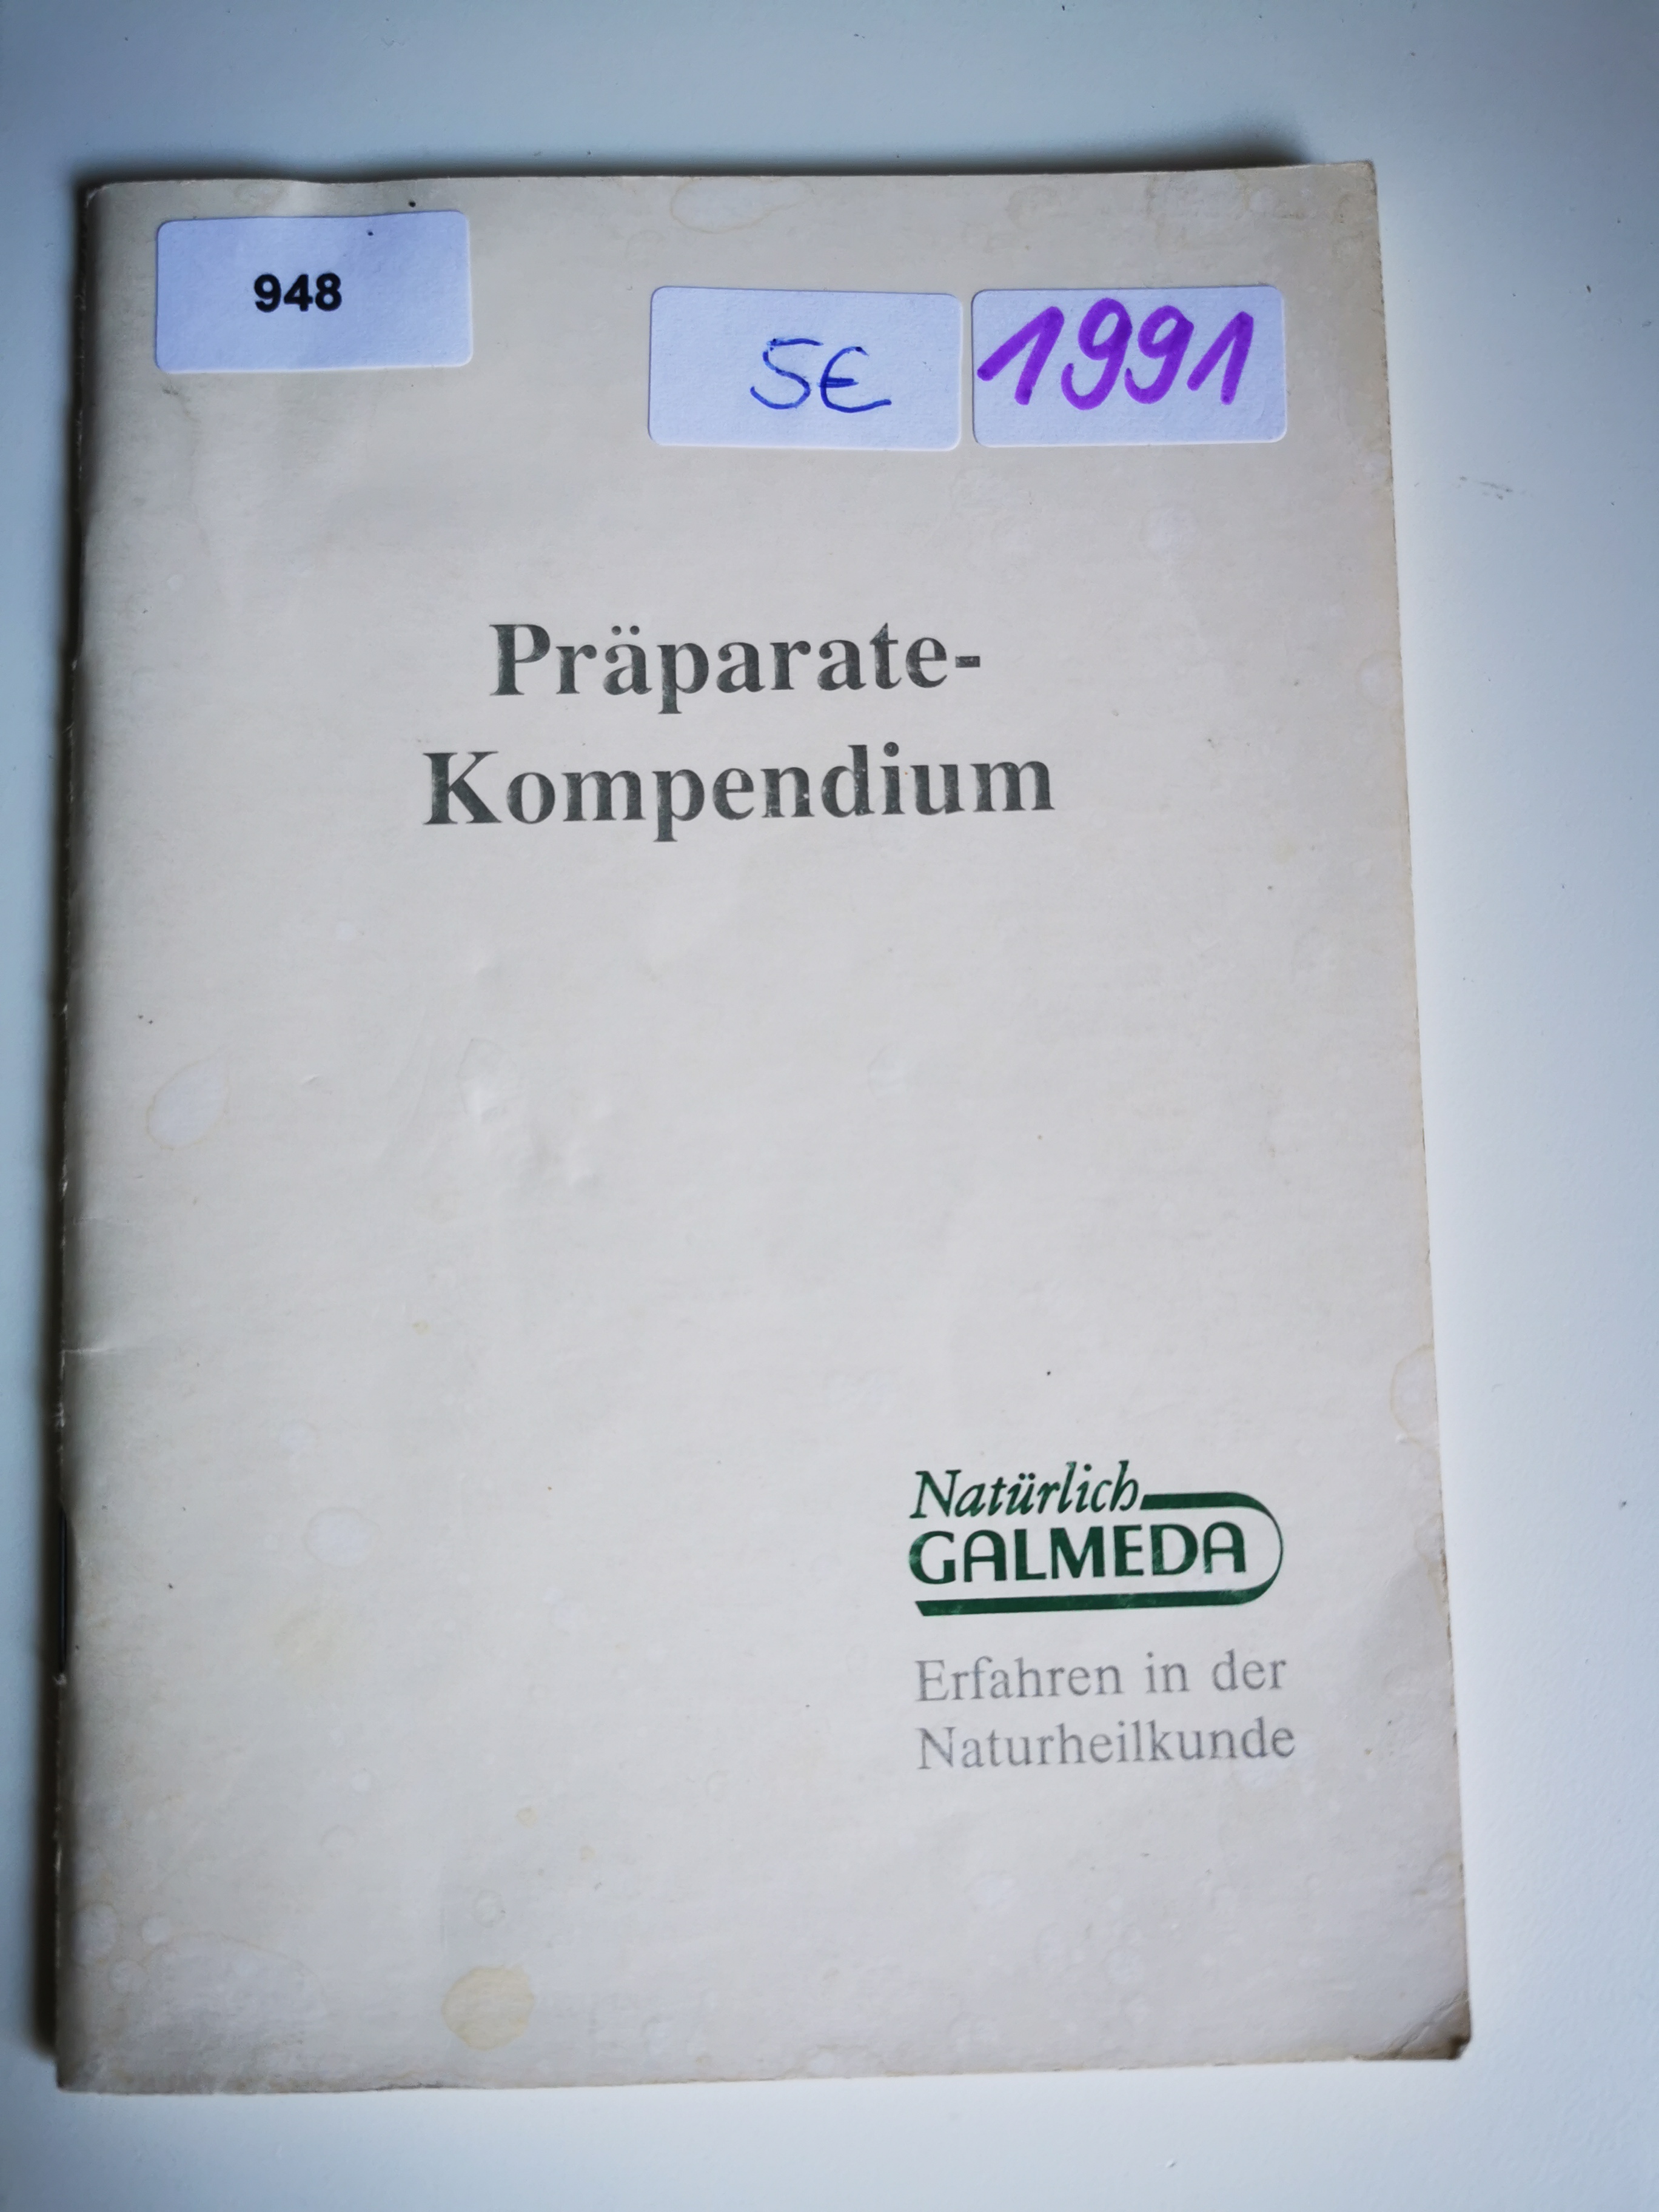 1x Galmeda GmbH Kompendium (1991)